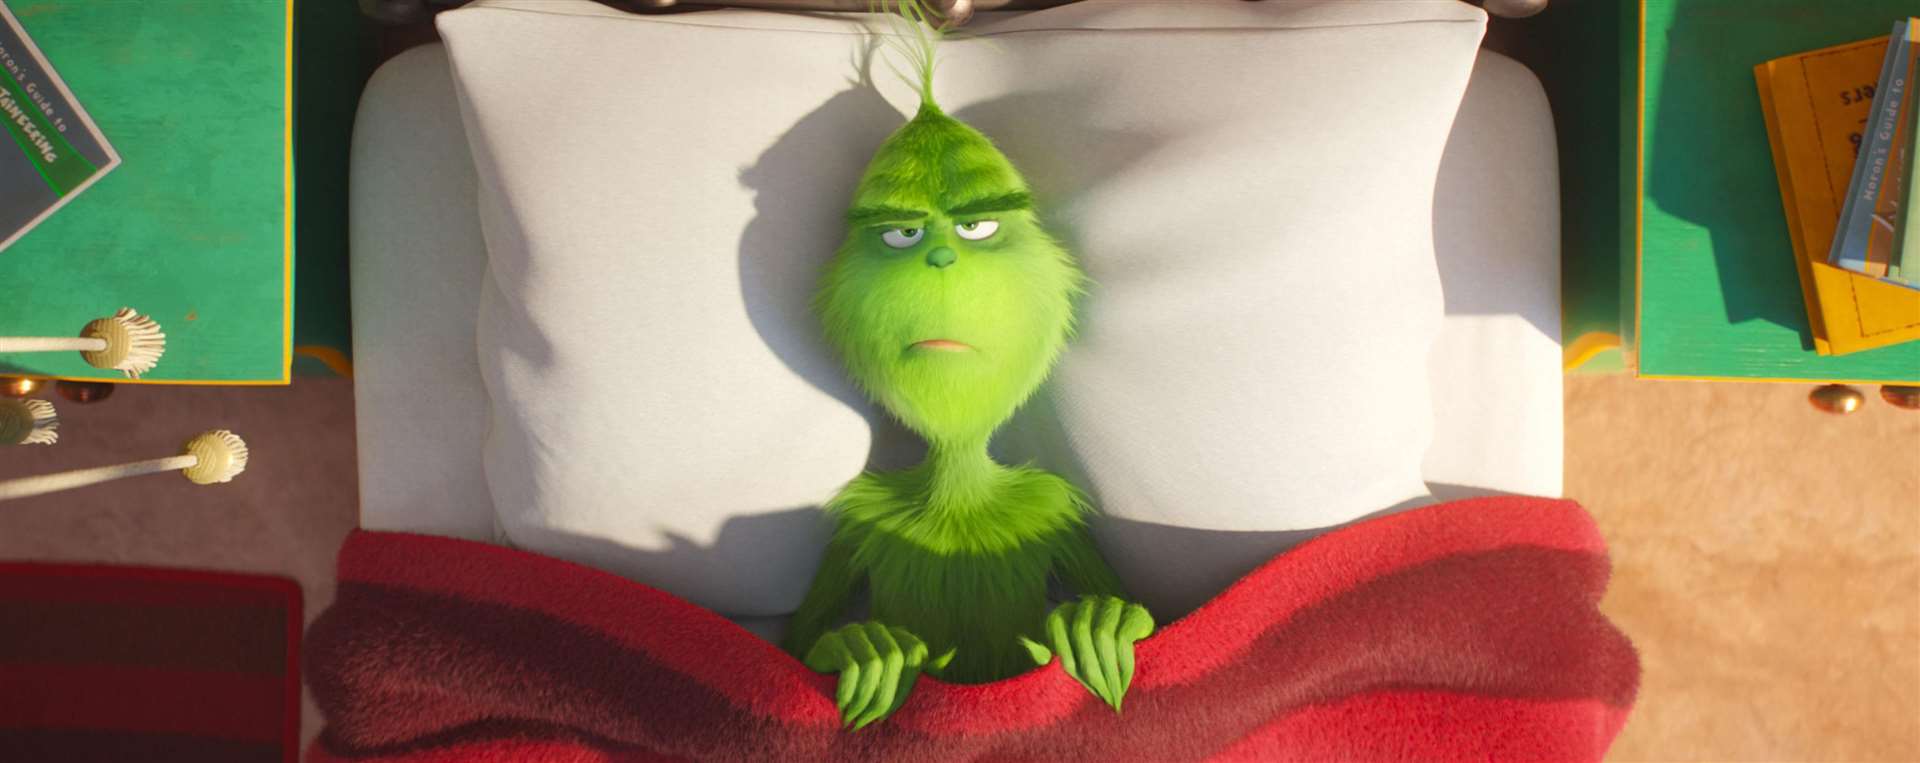 The Grinch, voiced by Benedict Cumberbatch. Picture: PA Photo/Universal Studios/Dr Seuss Enterprises.